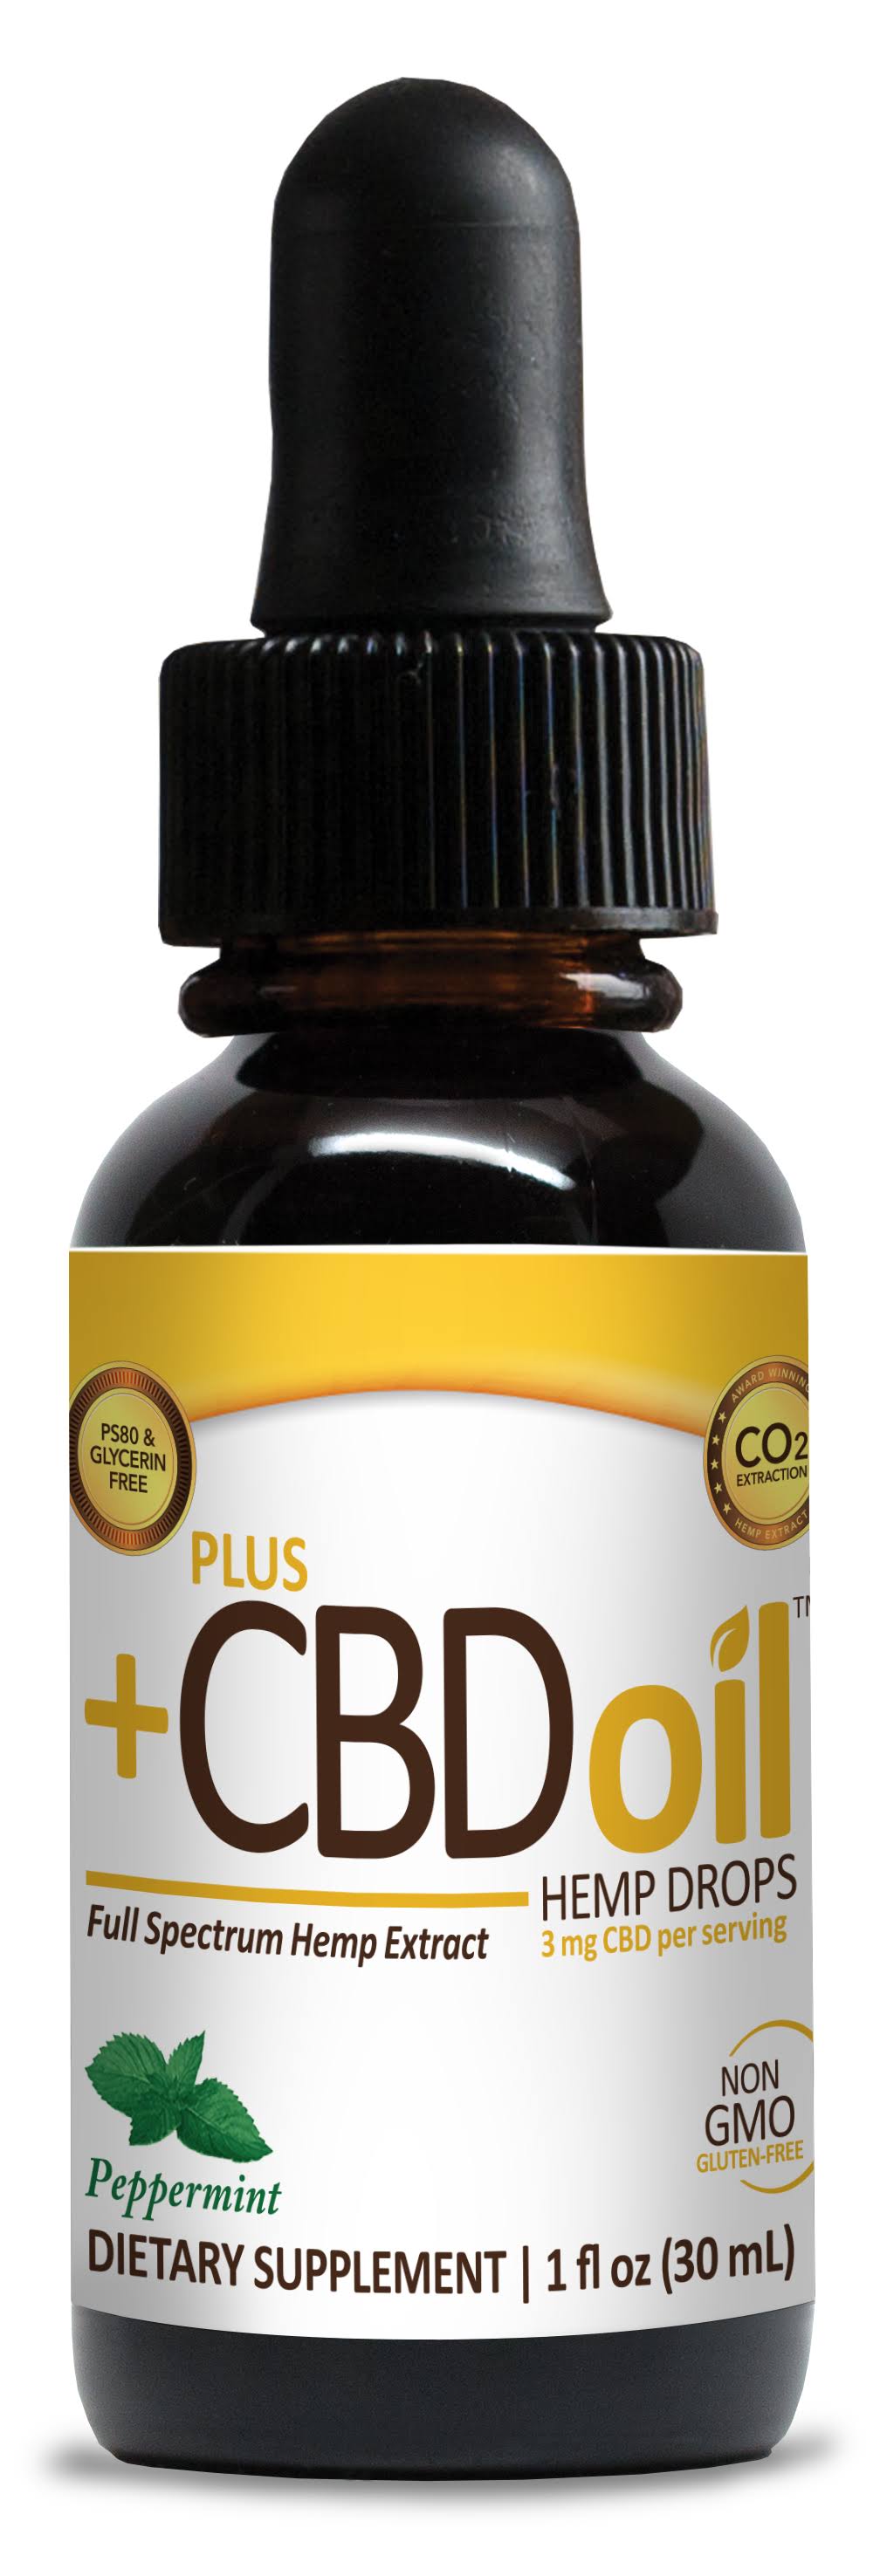 Plus +CBD Oil Gold Formula Drops - Peppermint, 1 fl oz